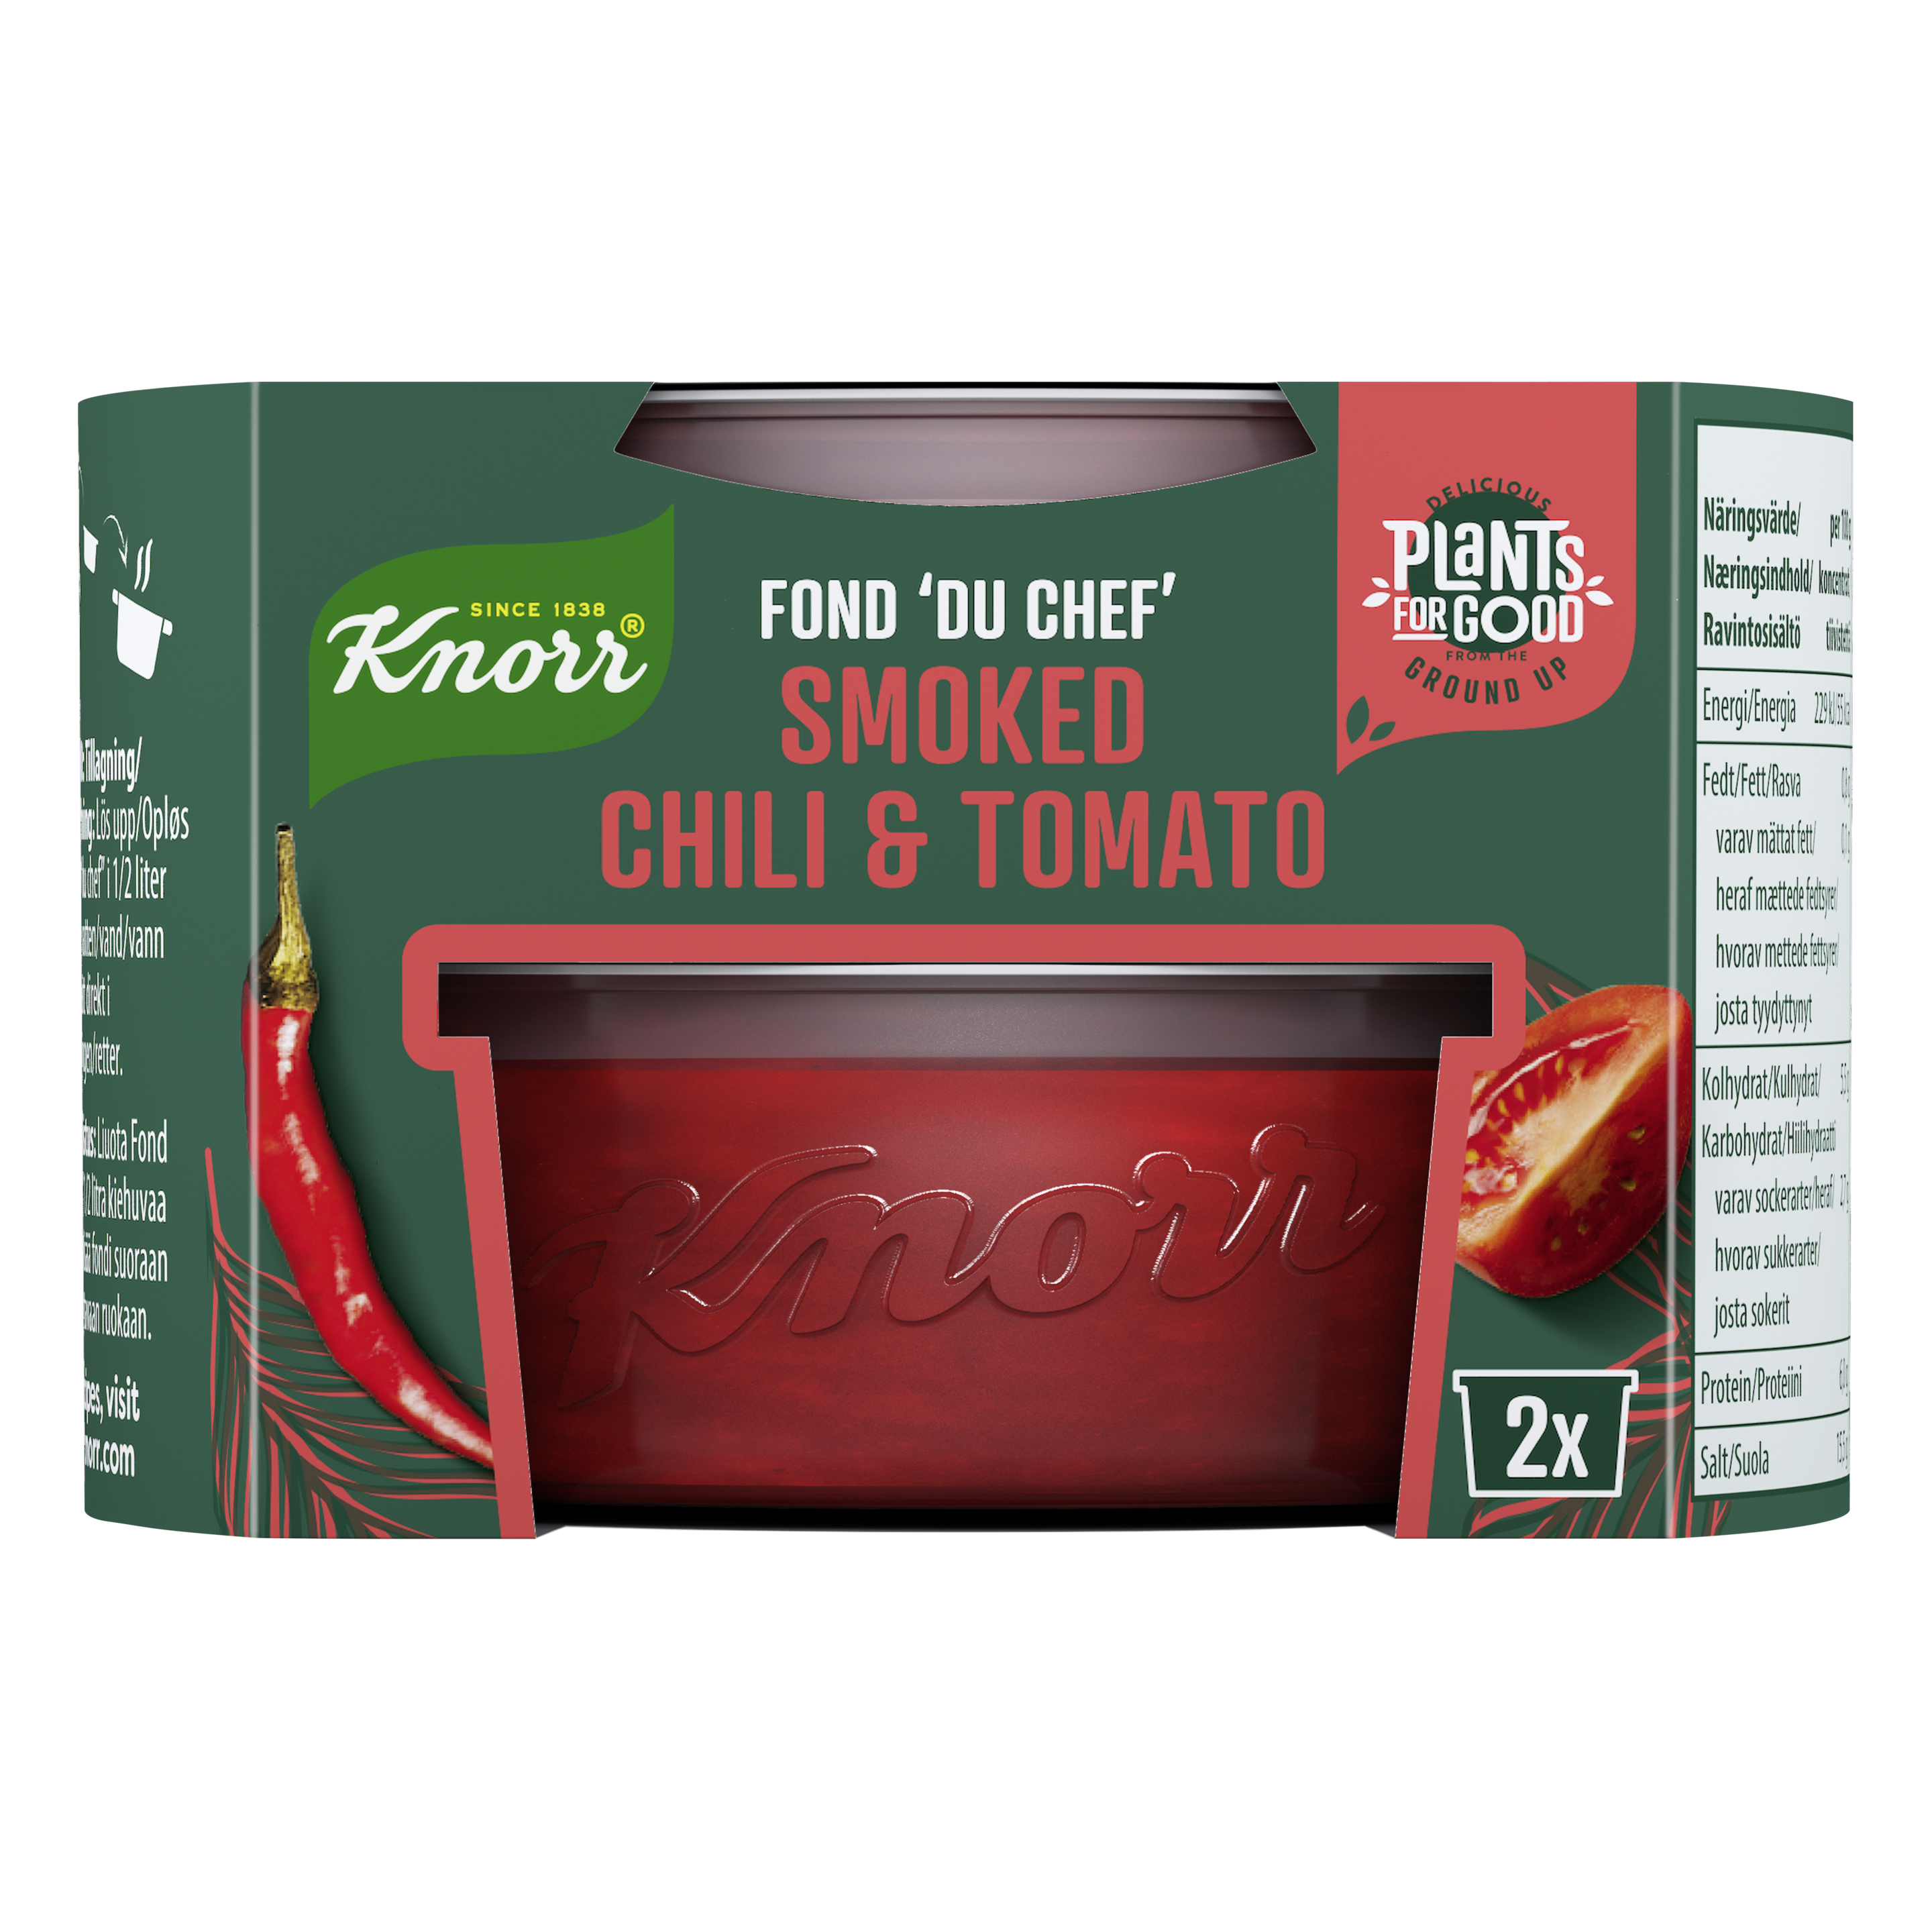 Fond "du Chef" Smoked Chili & Tomato